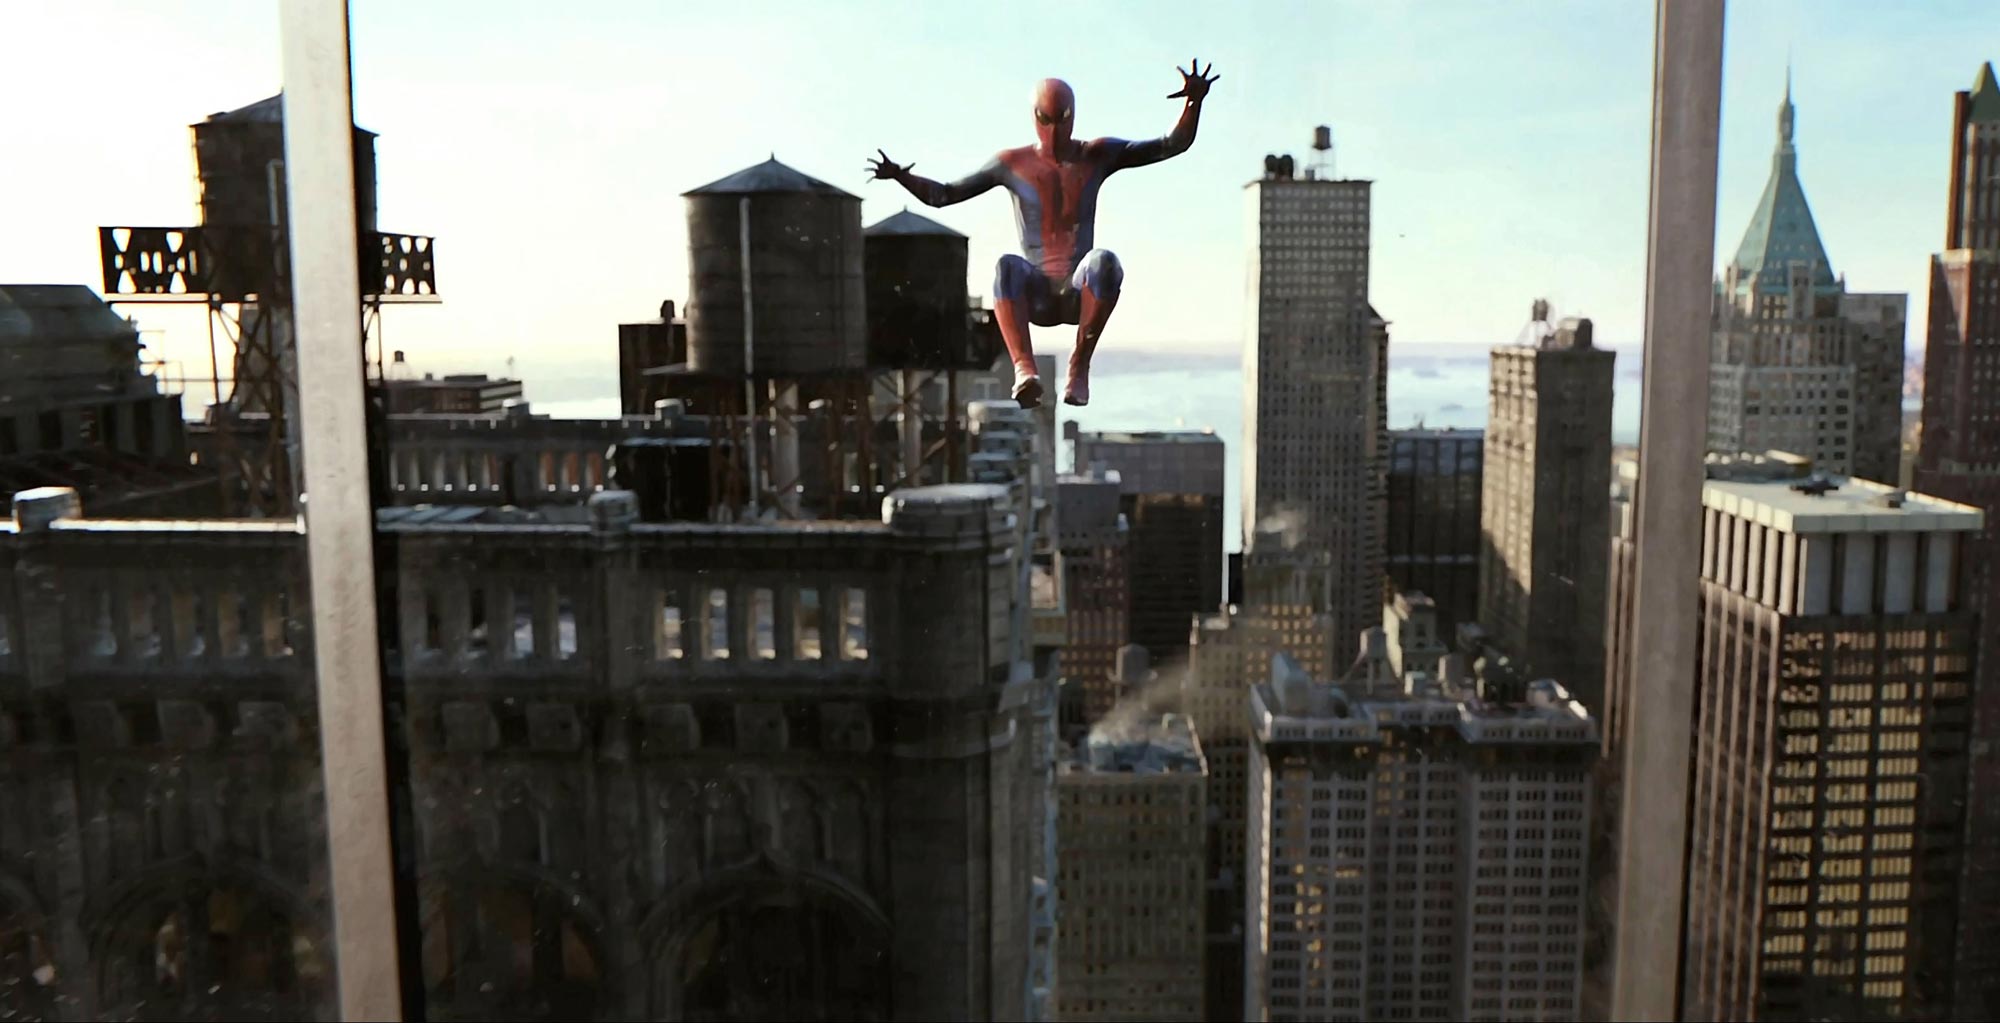 Sophie rain spiderman video 18. Эндрю Гарфилд на небоскребе. Человек паук Эндрю на небоскребе. Человек паук на небоскребе. Удивительный человек-паук 2012.